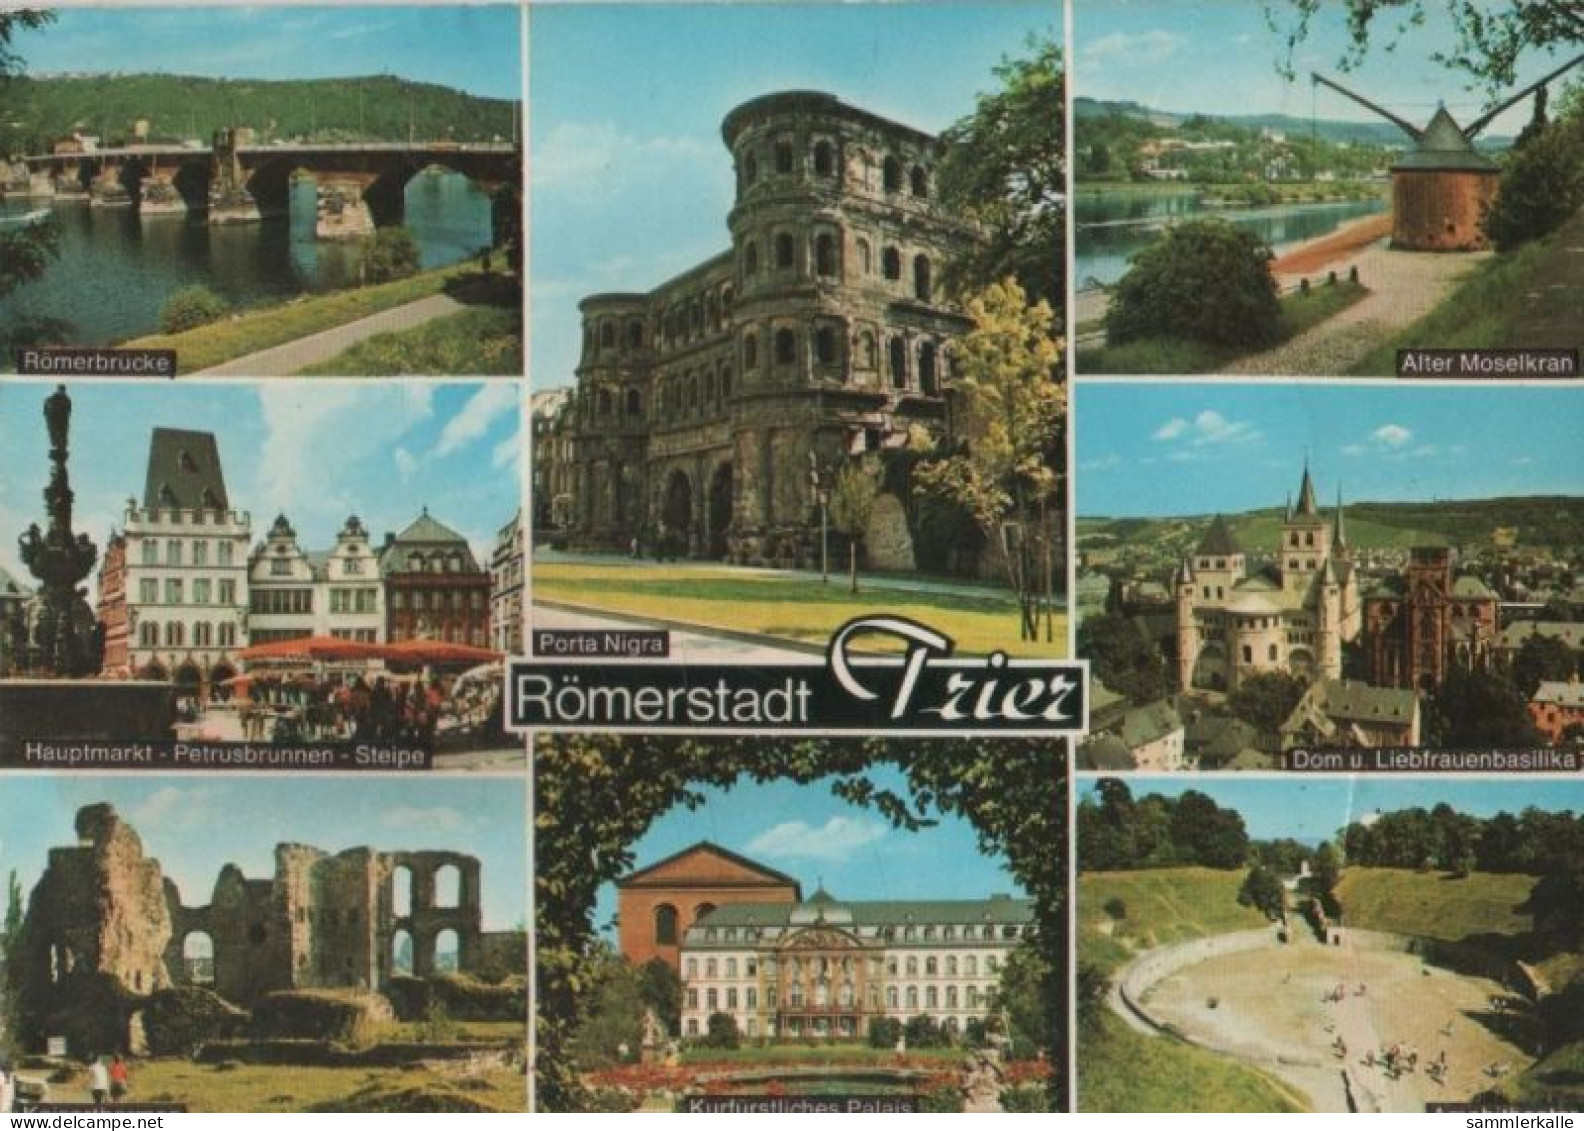 73593 - Trier - U.a. Kaiserthermen - 1977 - Trier